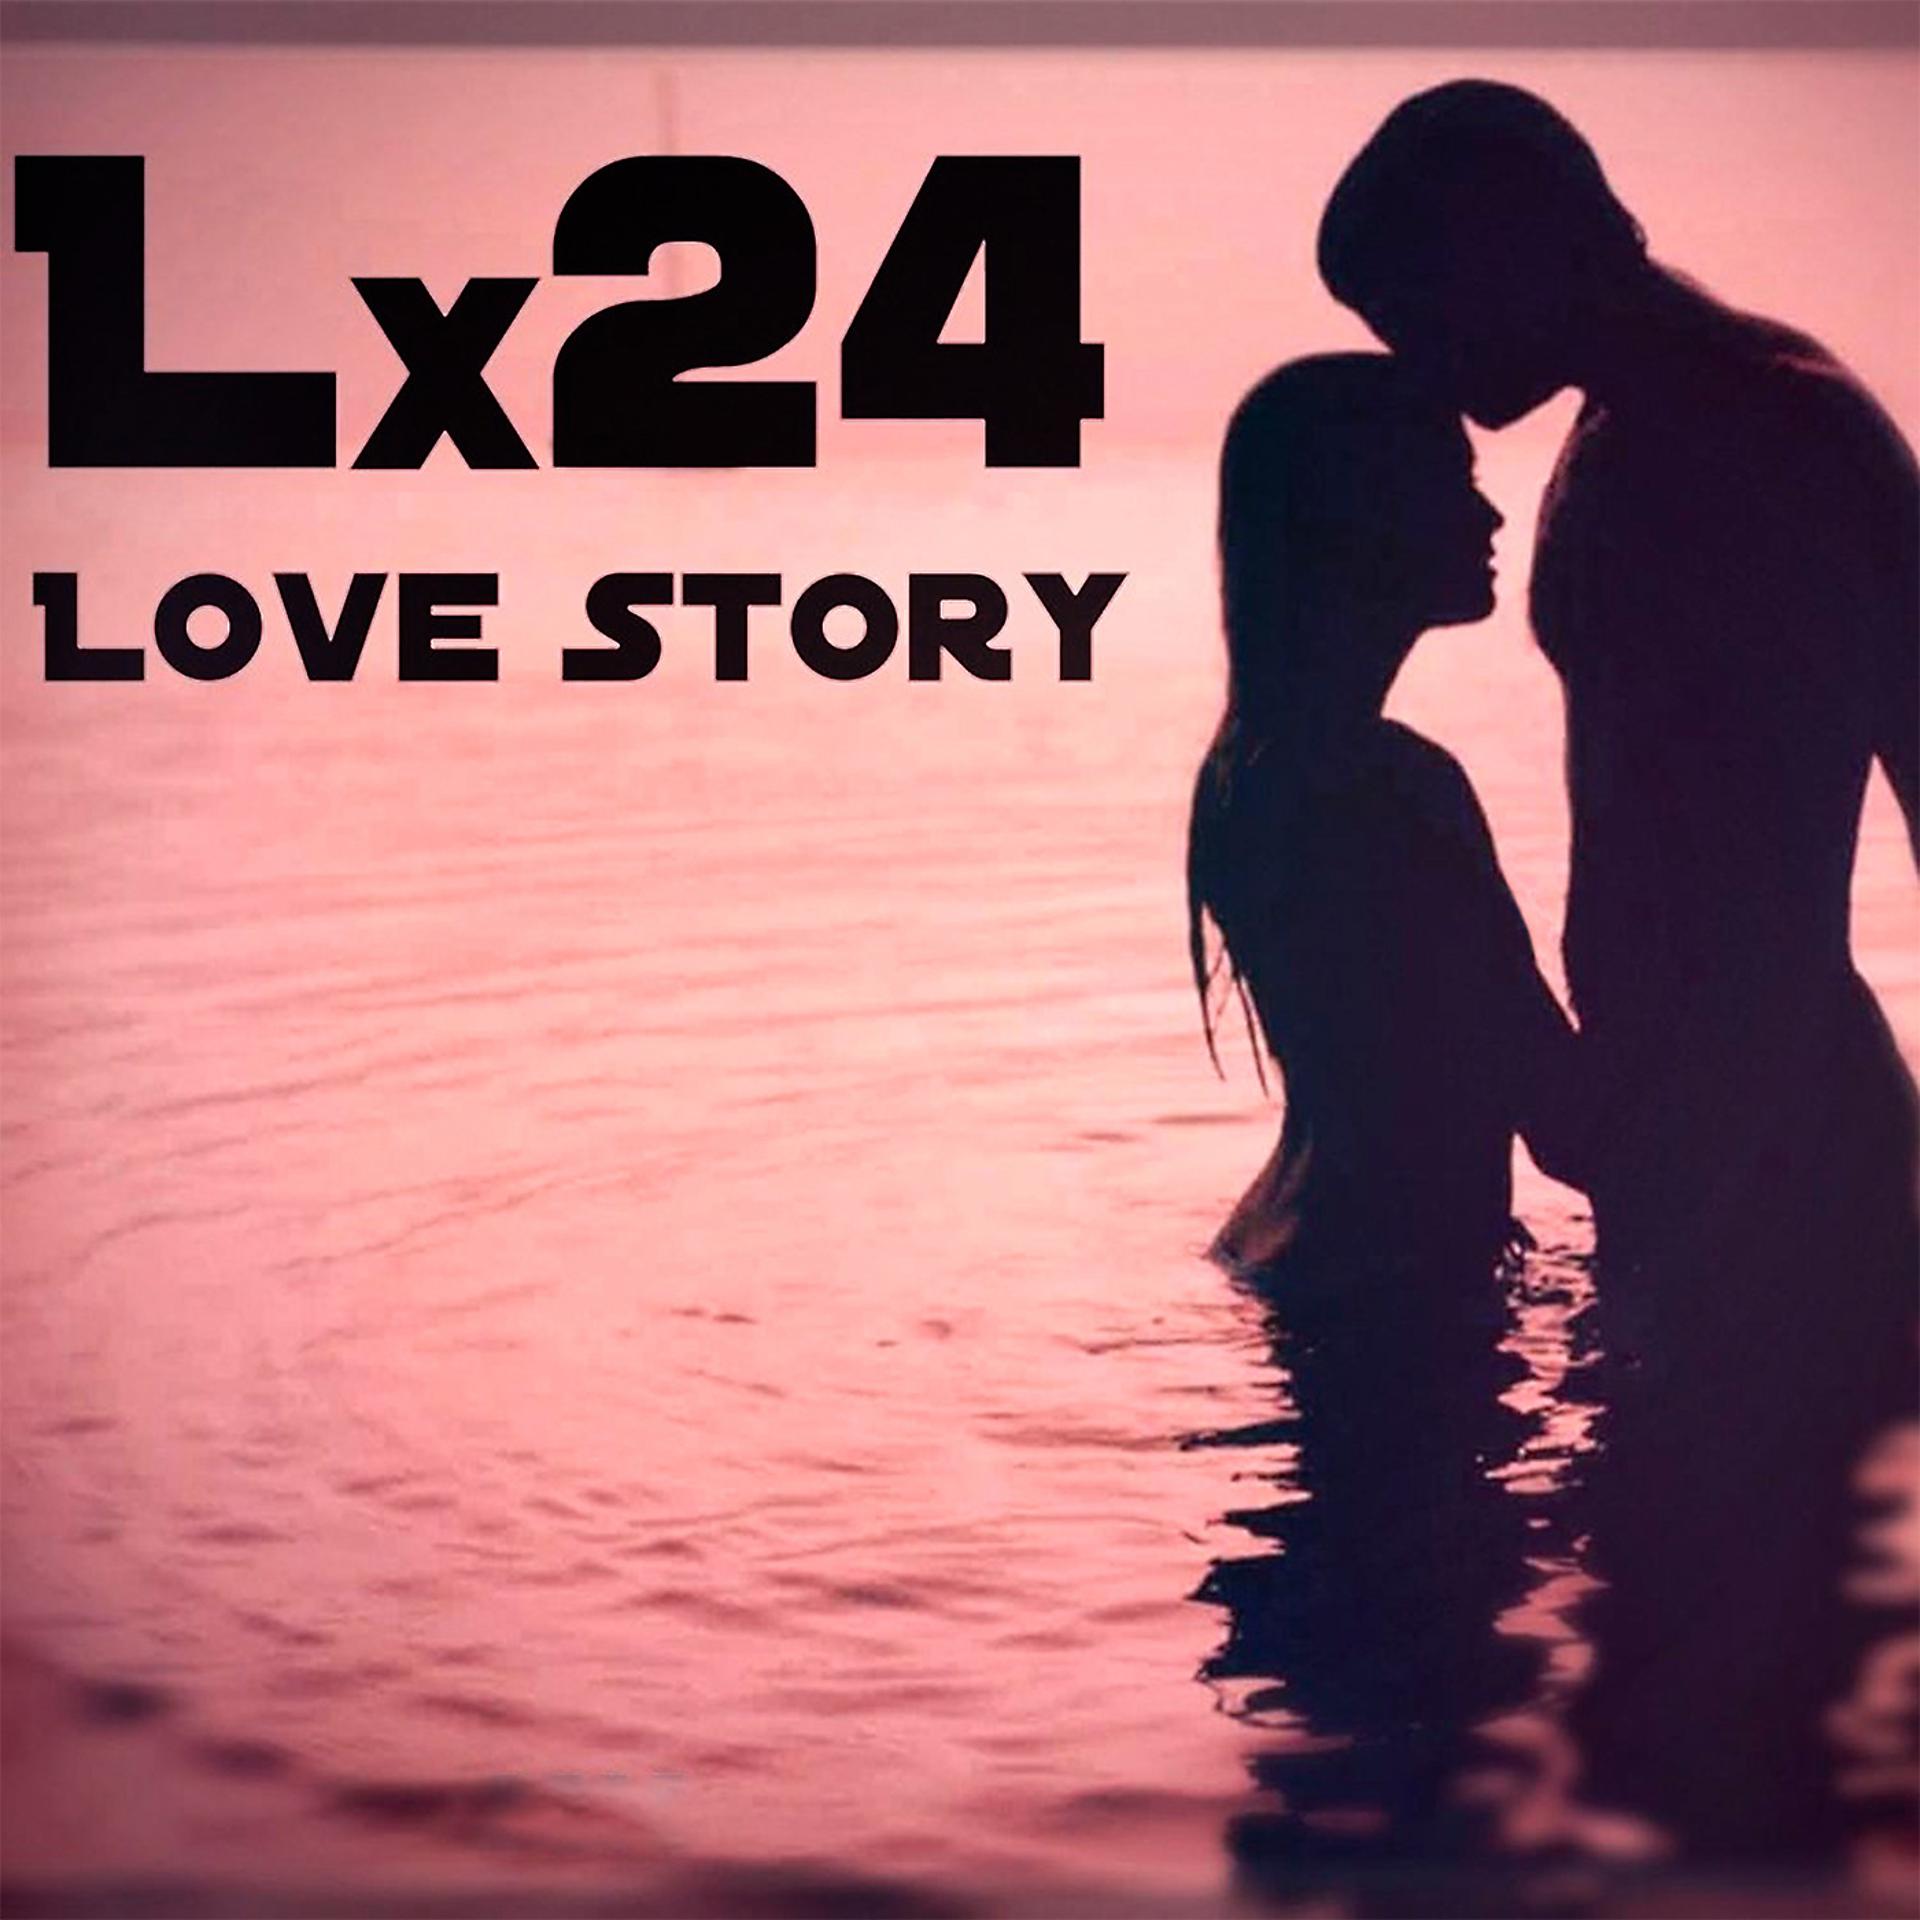 This love story. Картинки lx24. Lx24 Love story. Альбомы lx24. Lx24 уникальная.